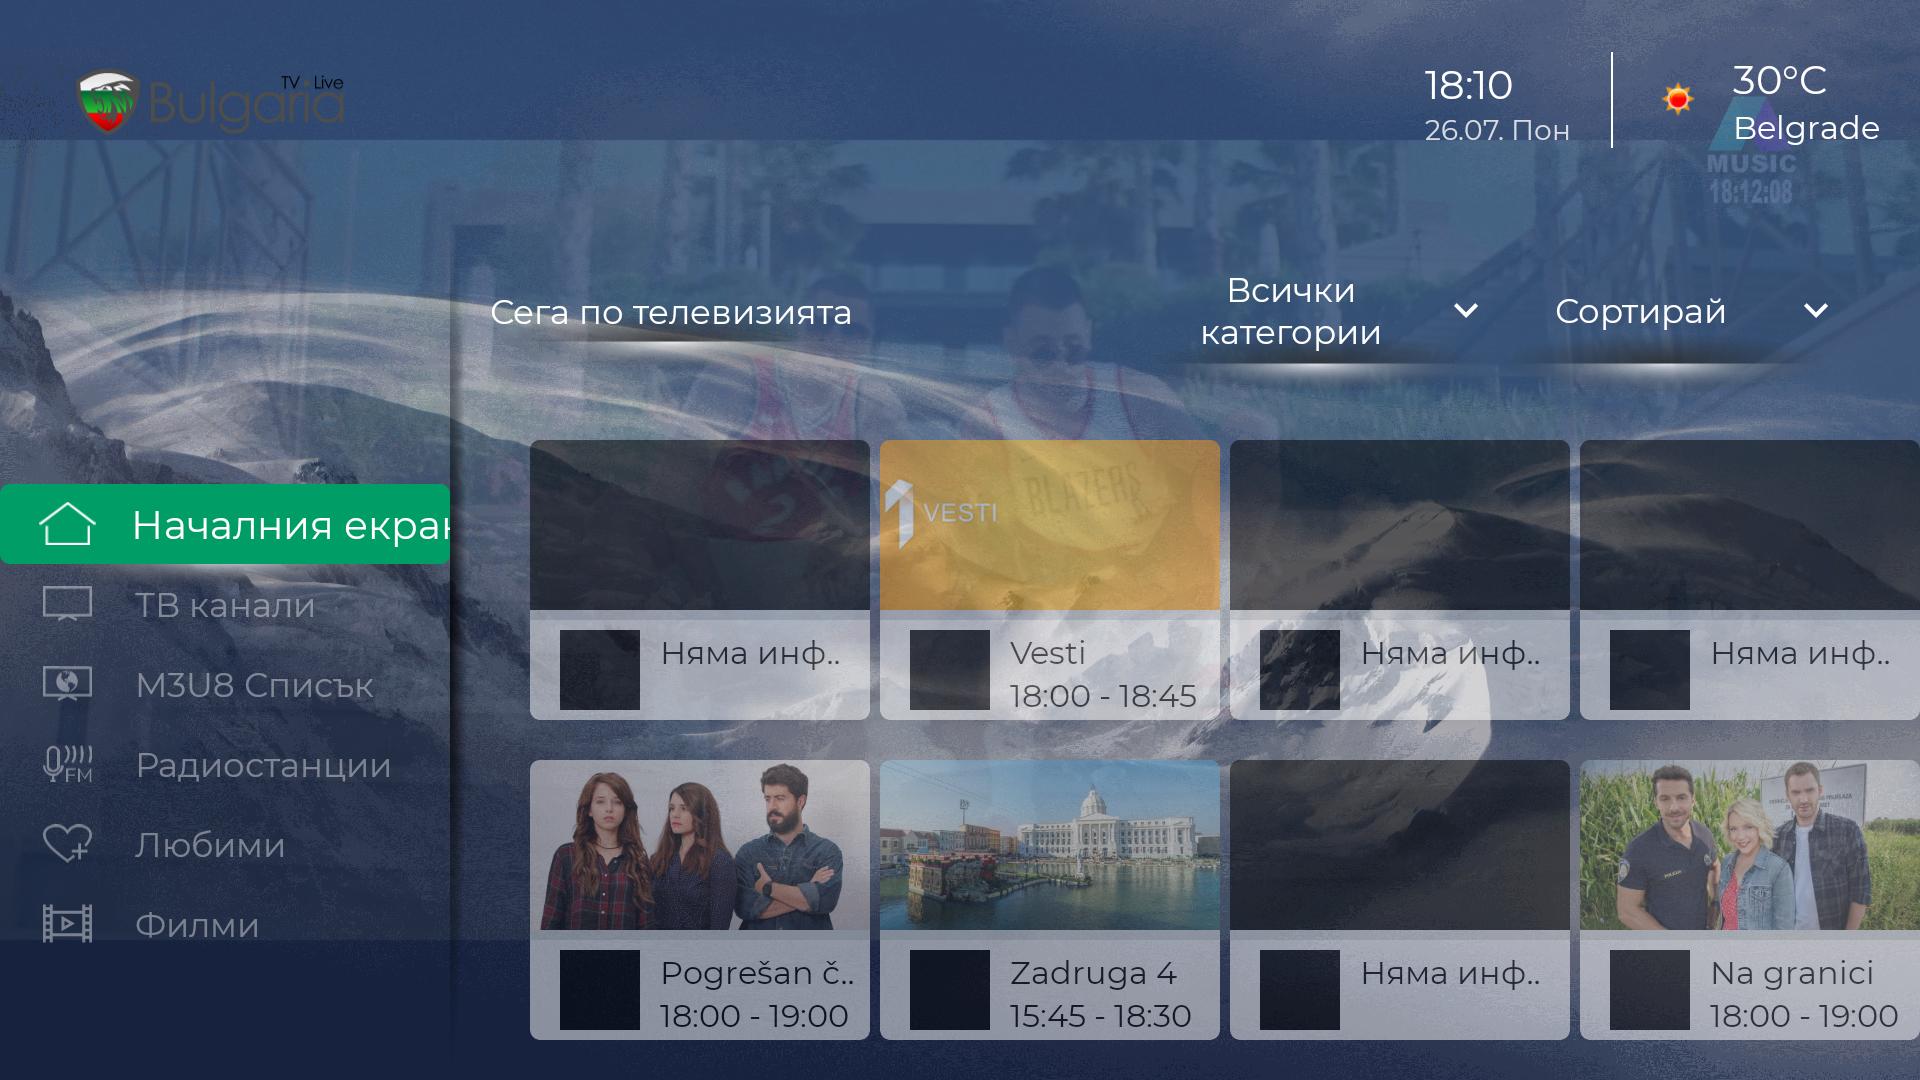 Bulgaria Live 1.2.04 Screenshot 1